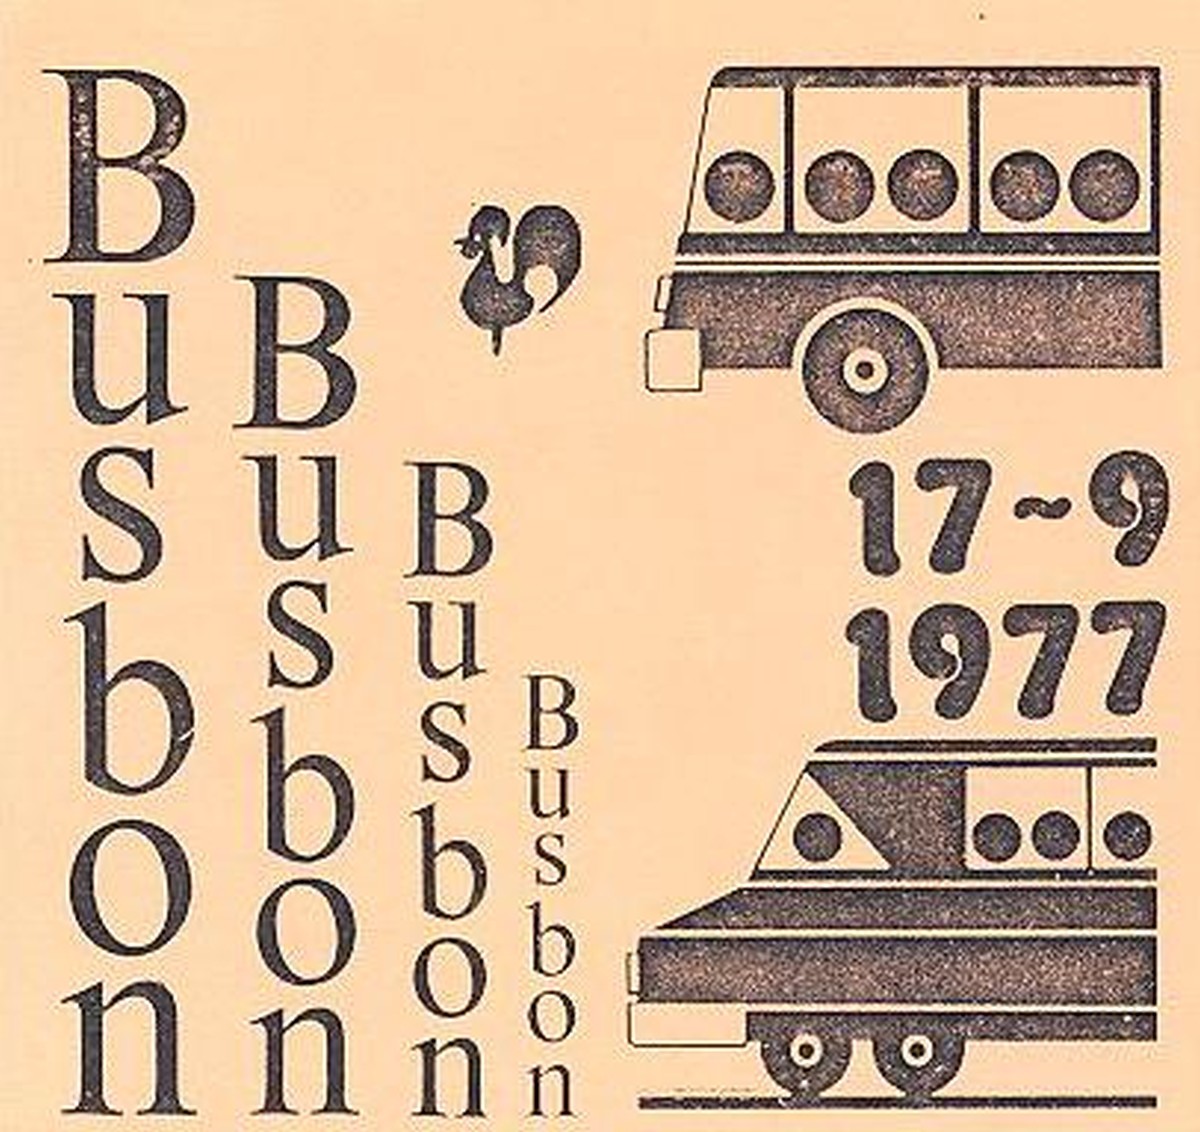 1977 09 17 Conv Jubileum (2)